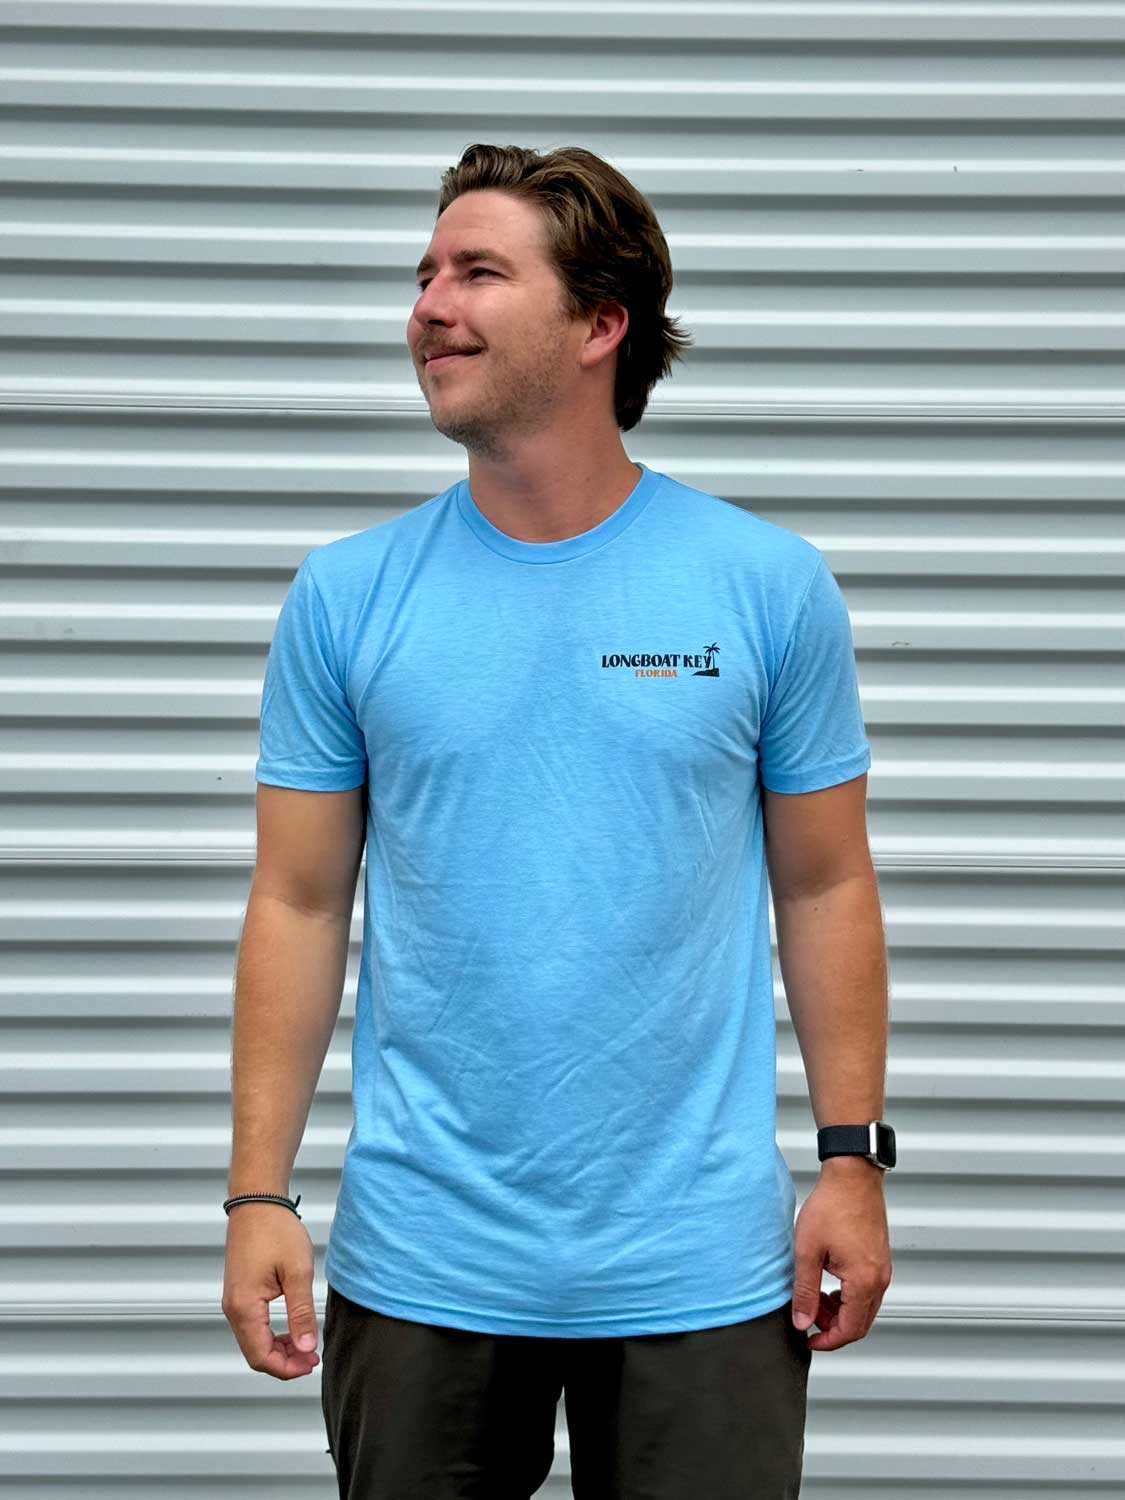 Techstyles: Men's Process Longboat Key Tri-Blend Crew T-Shirt